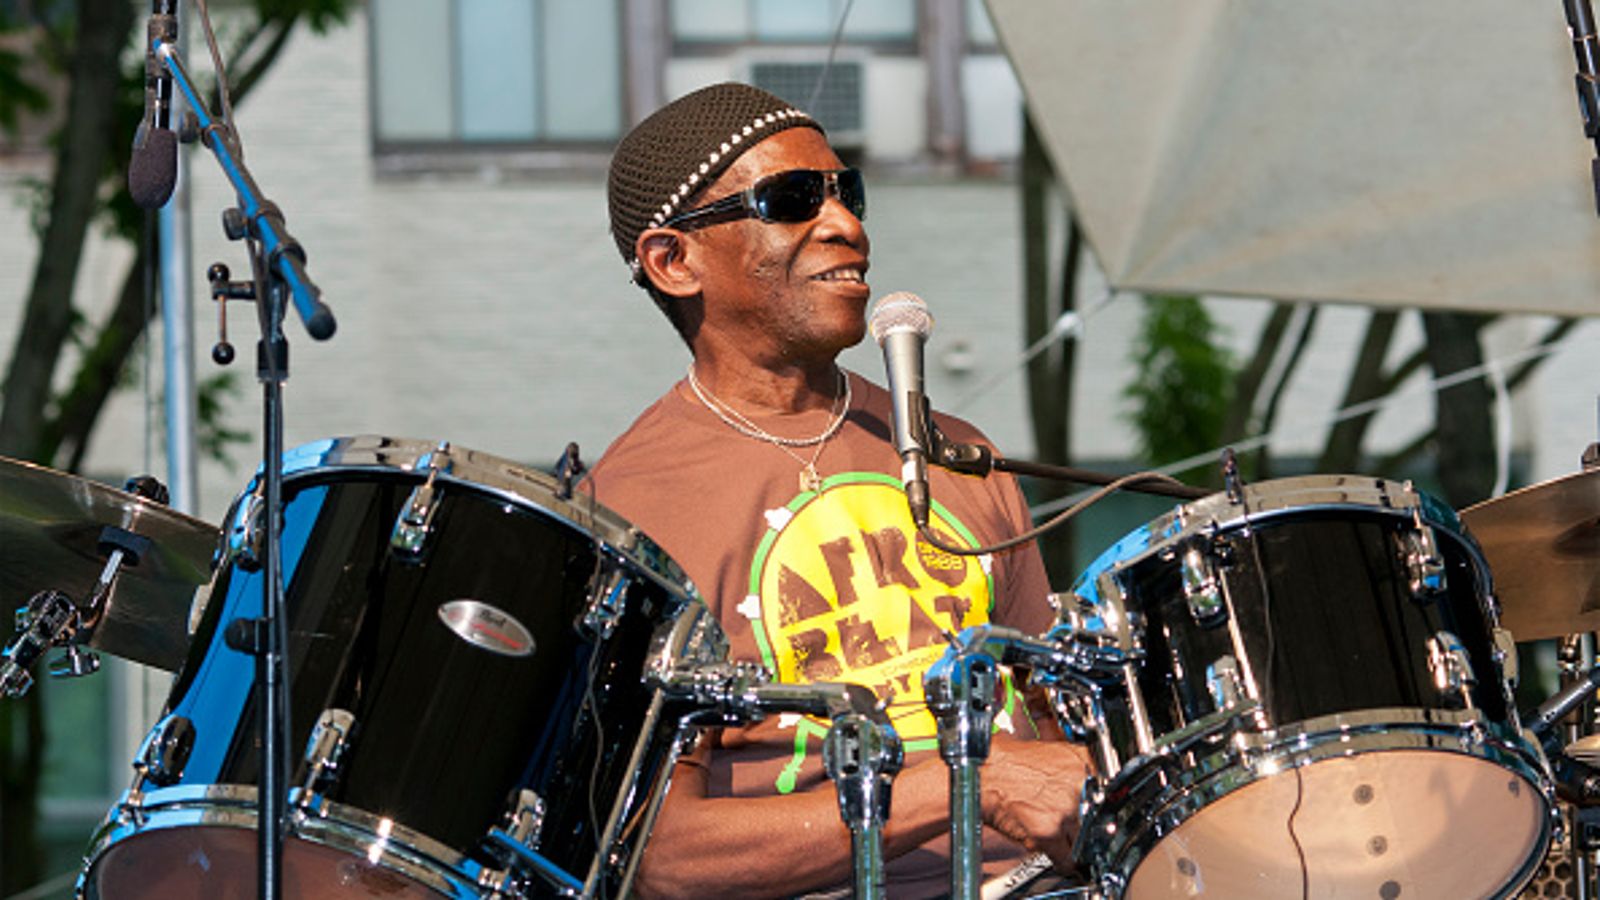 Панафриканист. Тони Аллен. Tony Allen (musician). Музыкант фелы кути. Nigerian Drummer Jazz 1960s.